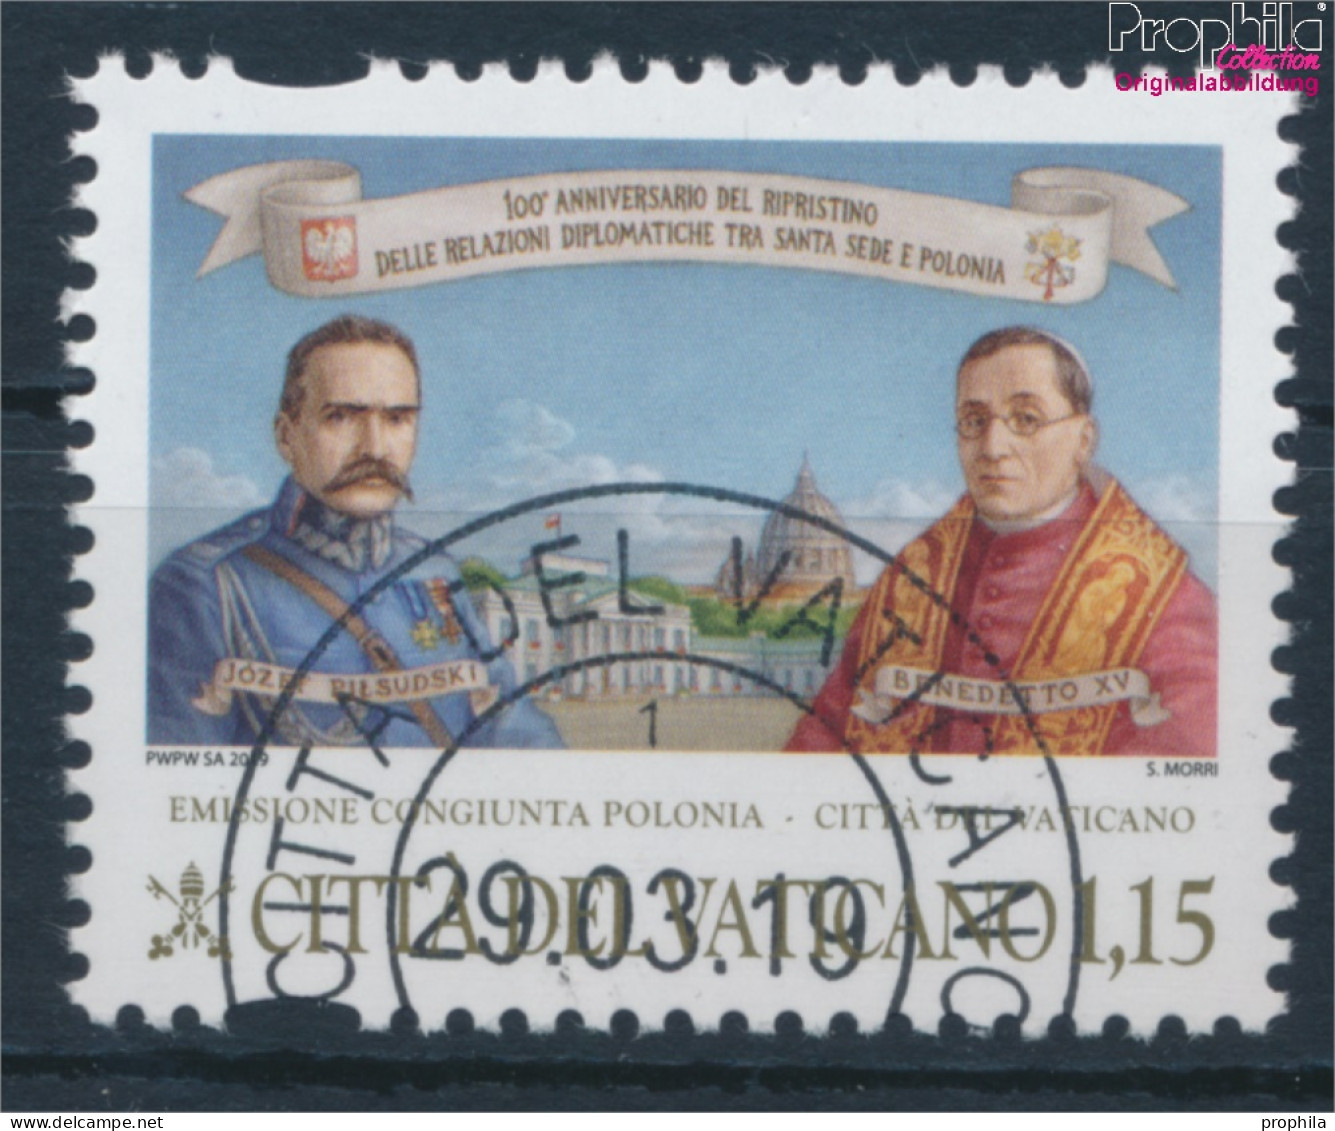 Vatikanstadt 1966 (kompl.Ausg.) Gestempelt 2019 Dipl. Beziehung Mit Polen (10405916 - Used Stamps